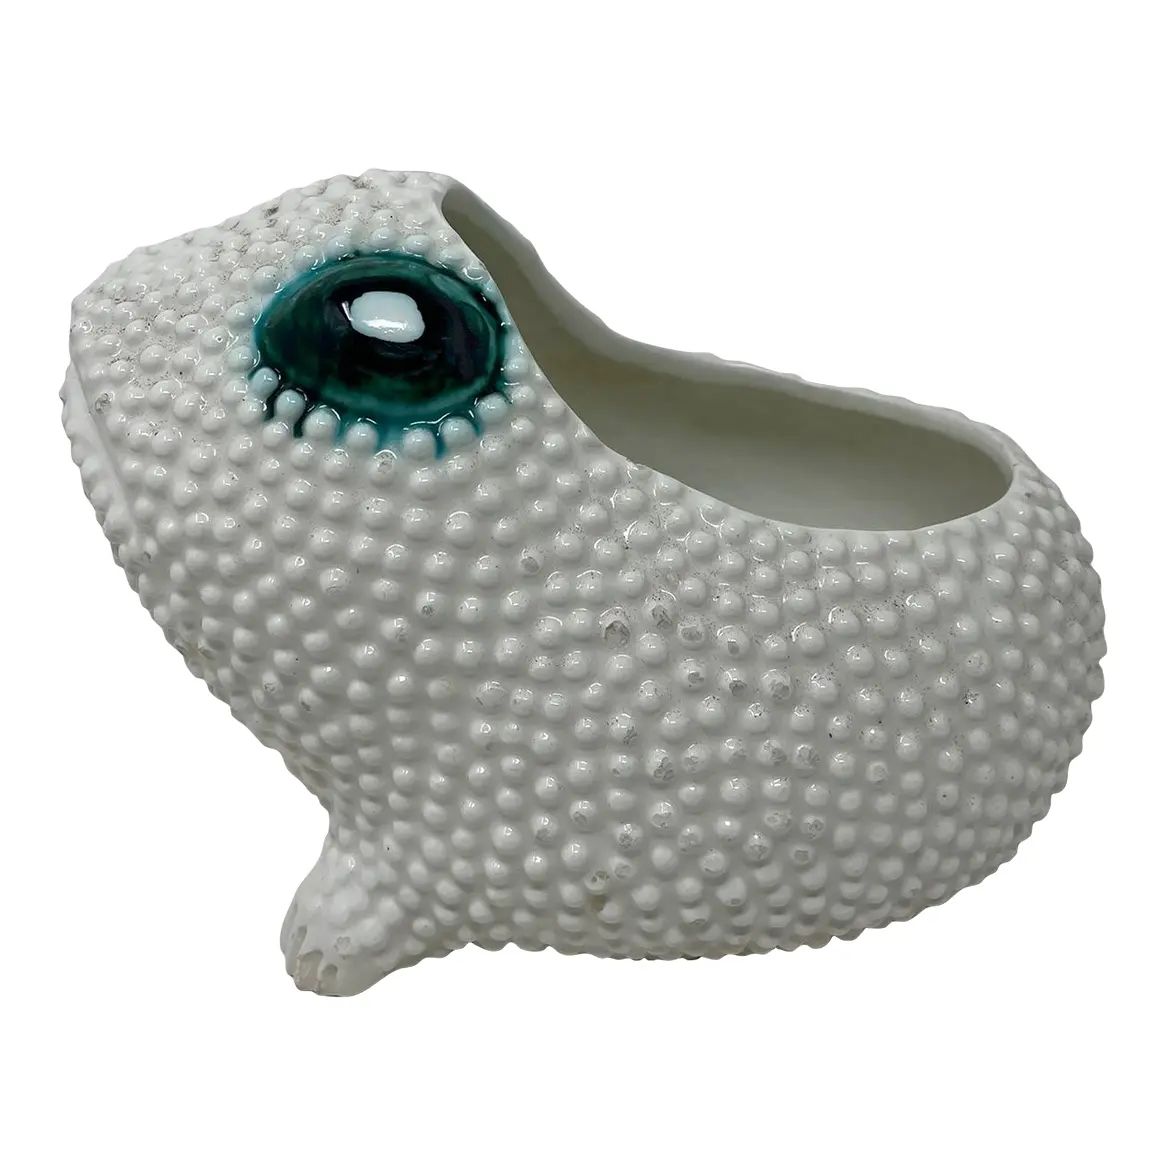 Italian Ceramic Knobbly Frog Planter | Chairish